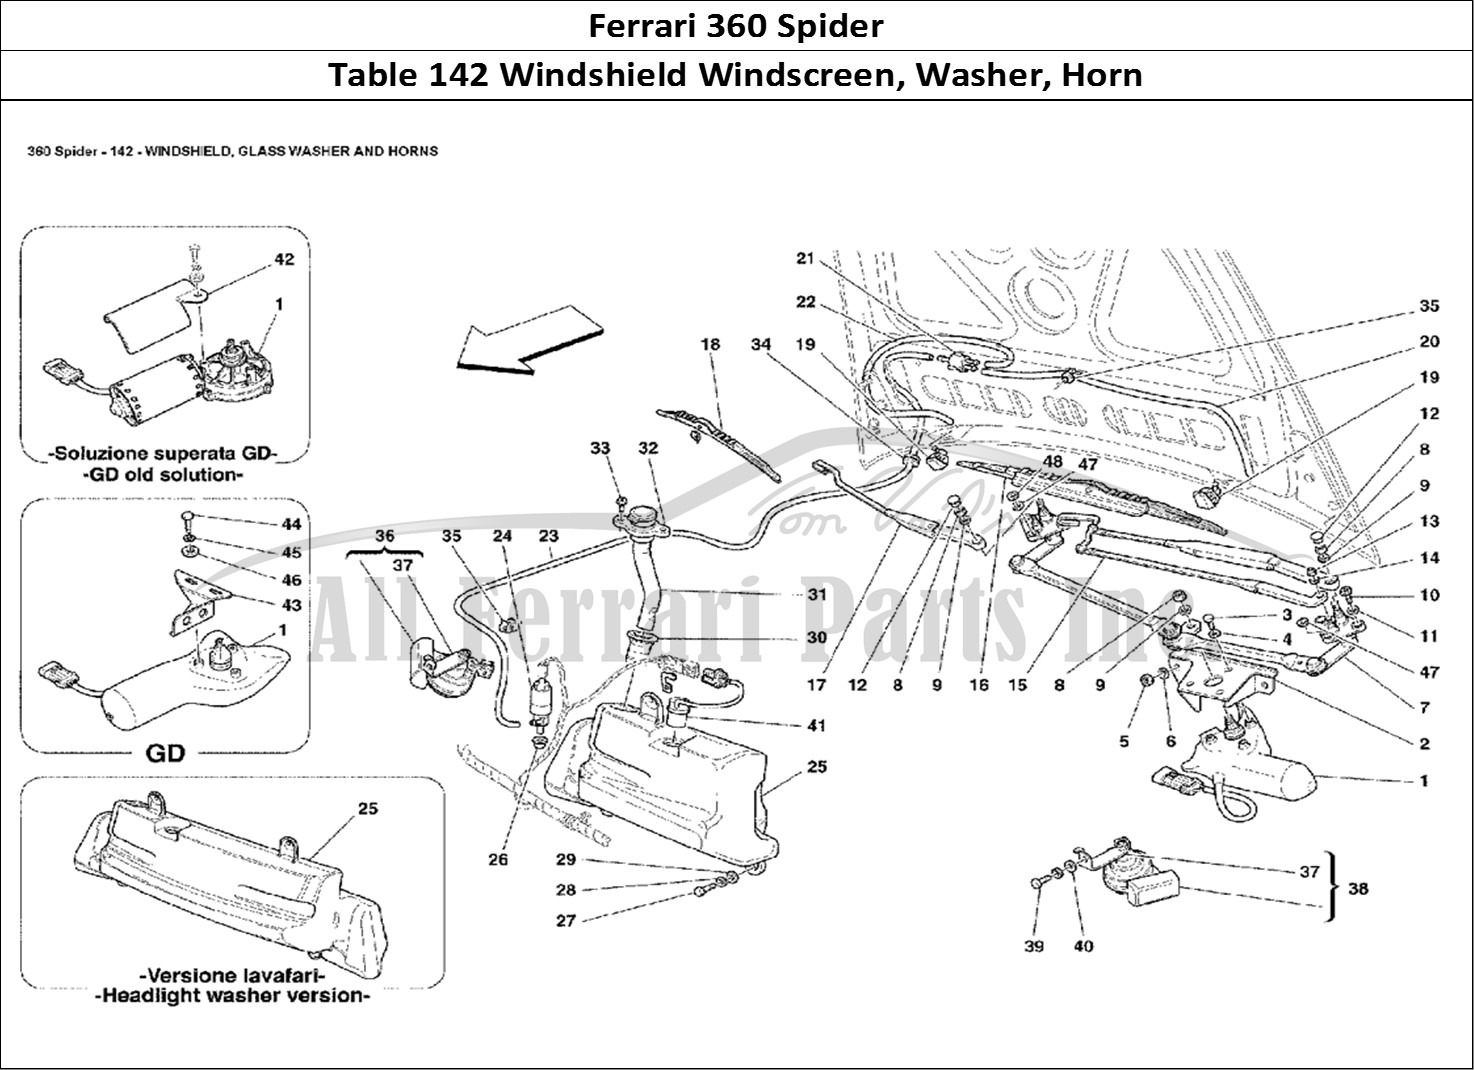 Ferrari Parts Ferrari 360 Spider Page 142 Windshield, Glass Washer